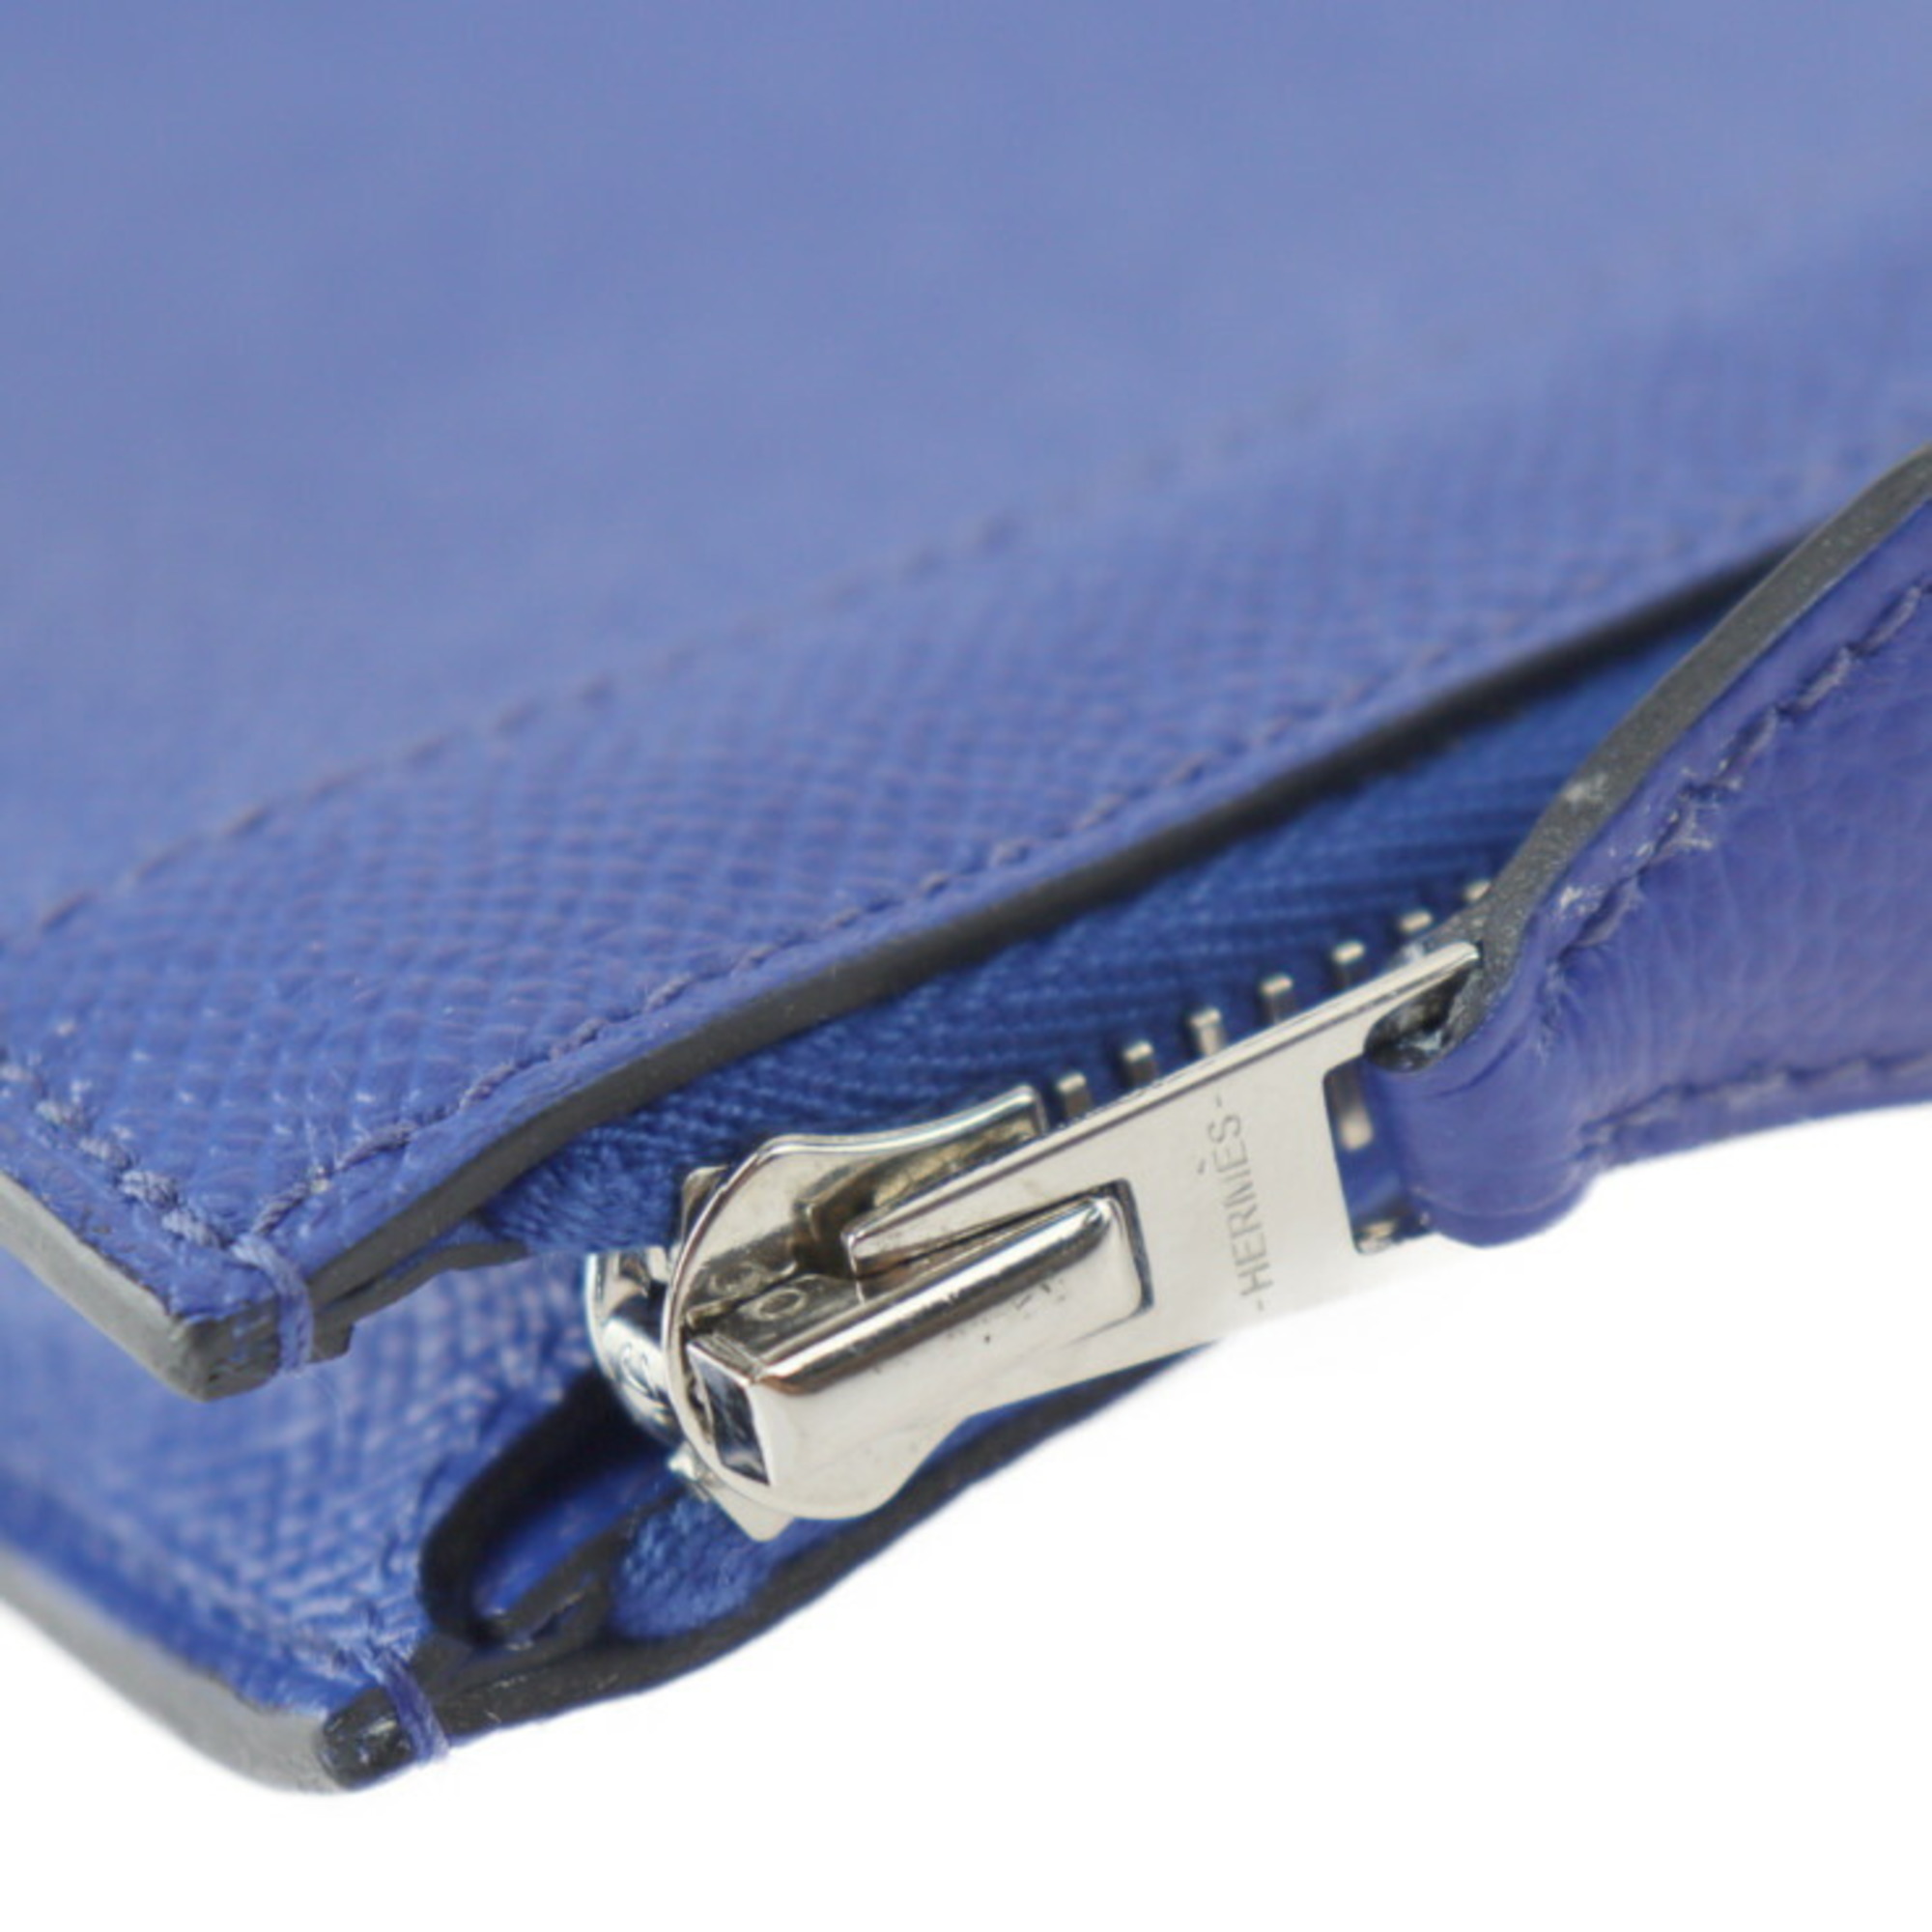 HERMES Hermes Zip Tablet Clutch Bag 070227CK Voe Epsom Blue Electric Silver Hardware Computer L-shaped Zipper Second Pouch D Engraving